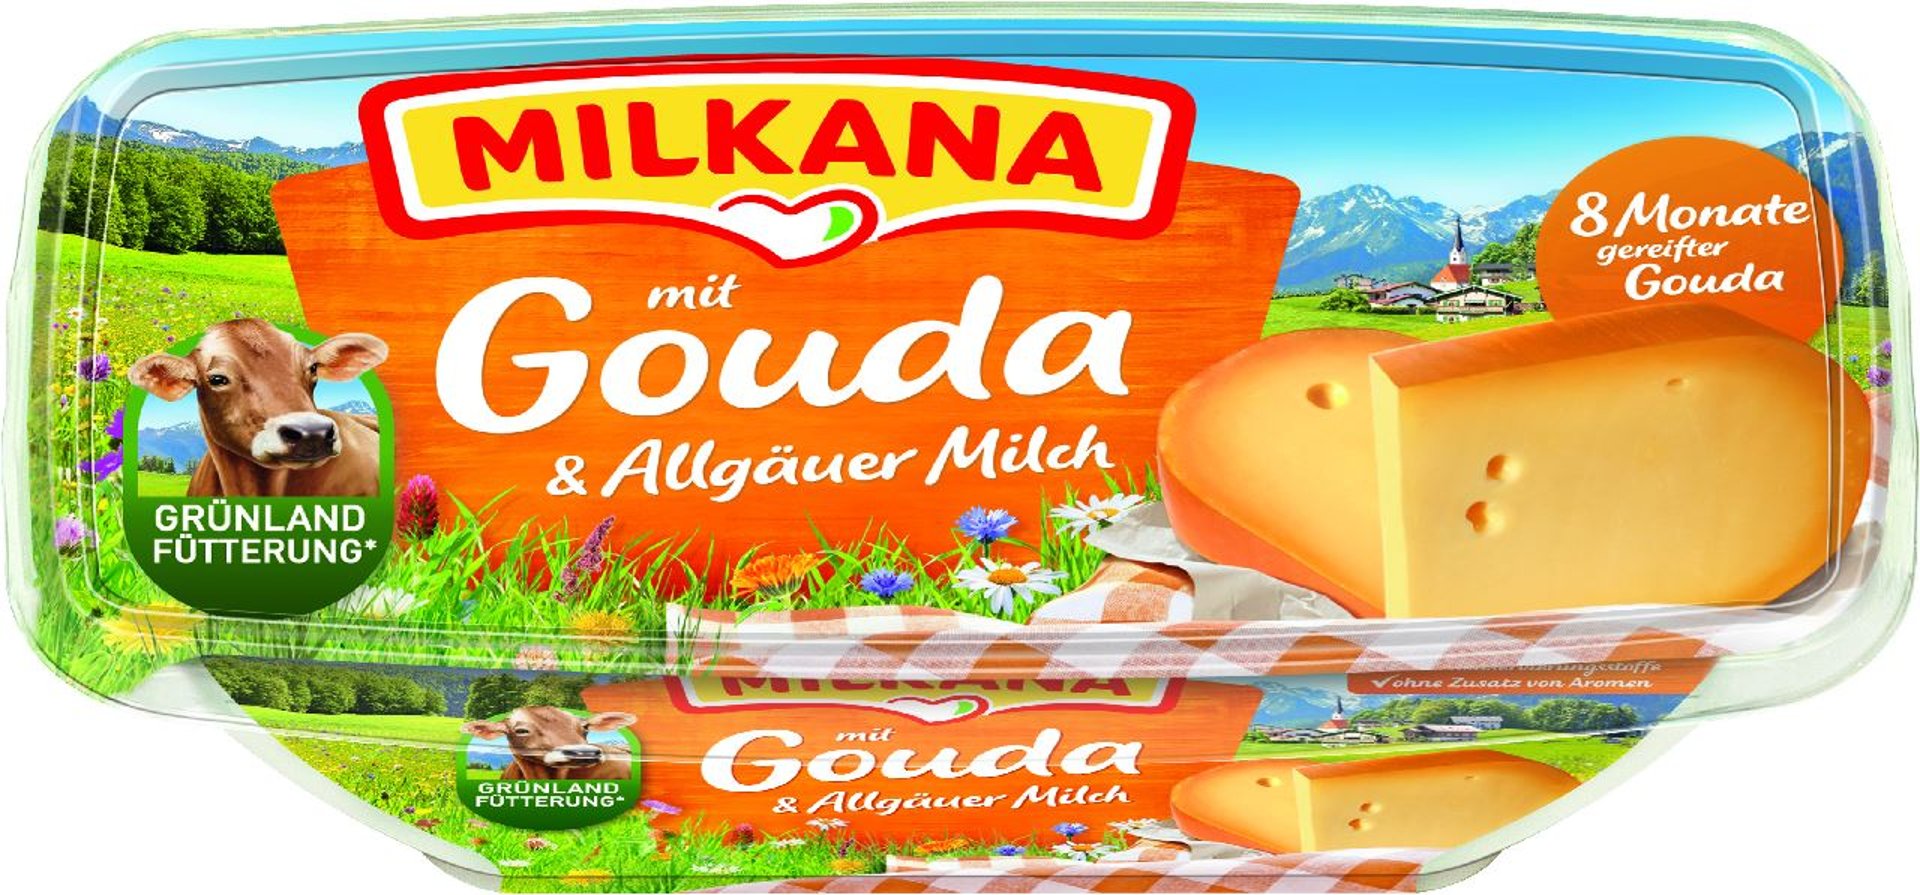 Milkana - Frischeschale Gouda 45% - 190 g Tiegel